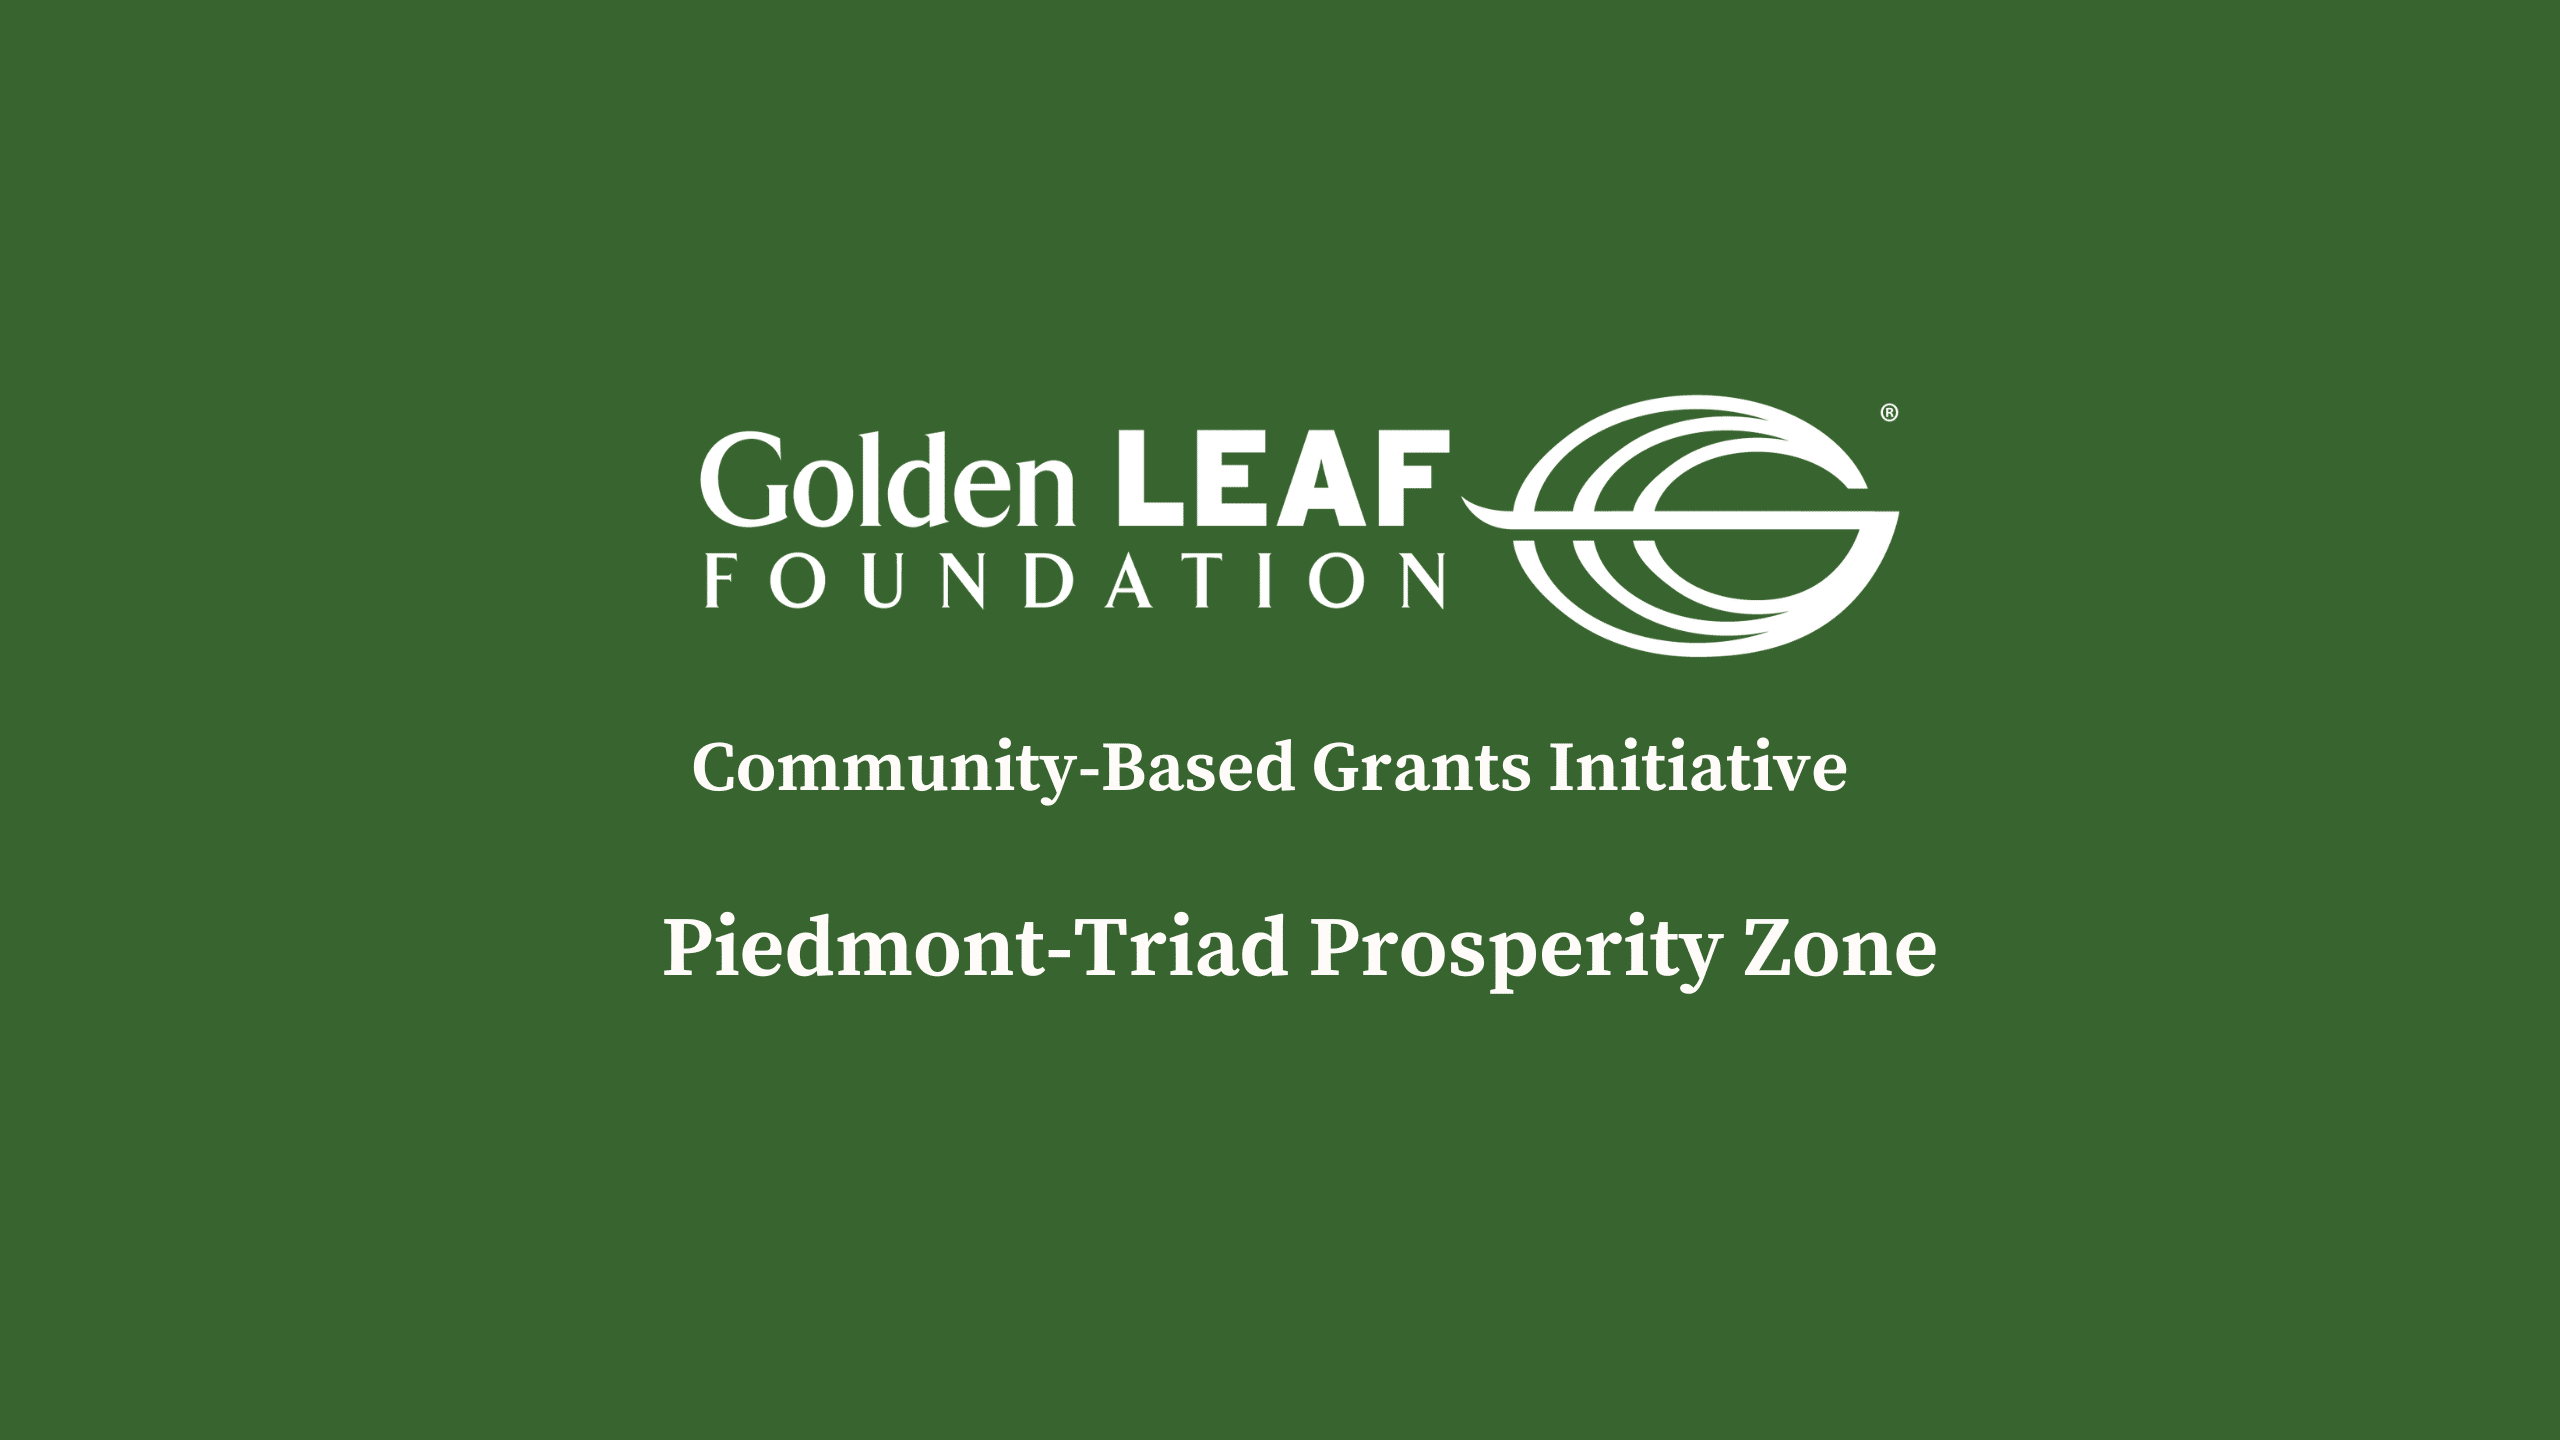 Golden LEAF to launch Community-Based Grants Initiative in Piedmont-Triad Prosperity Zone